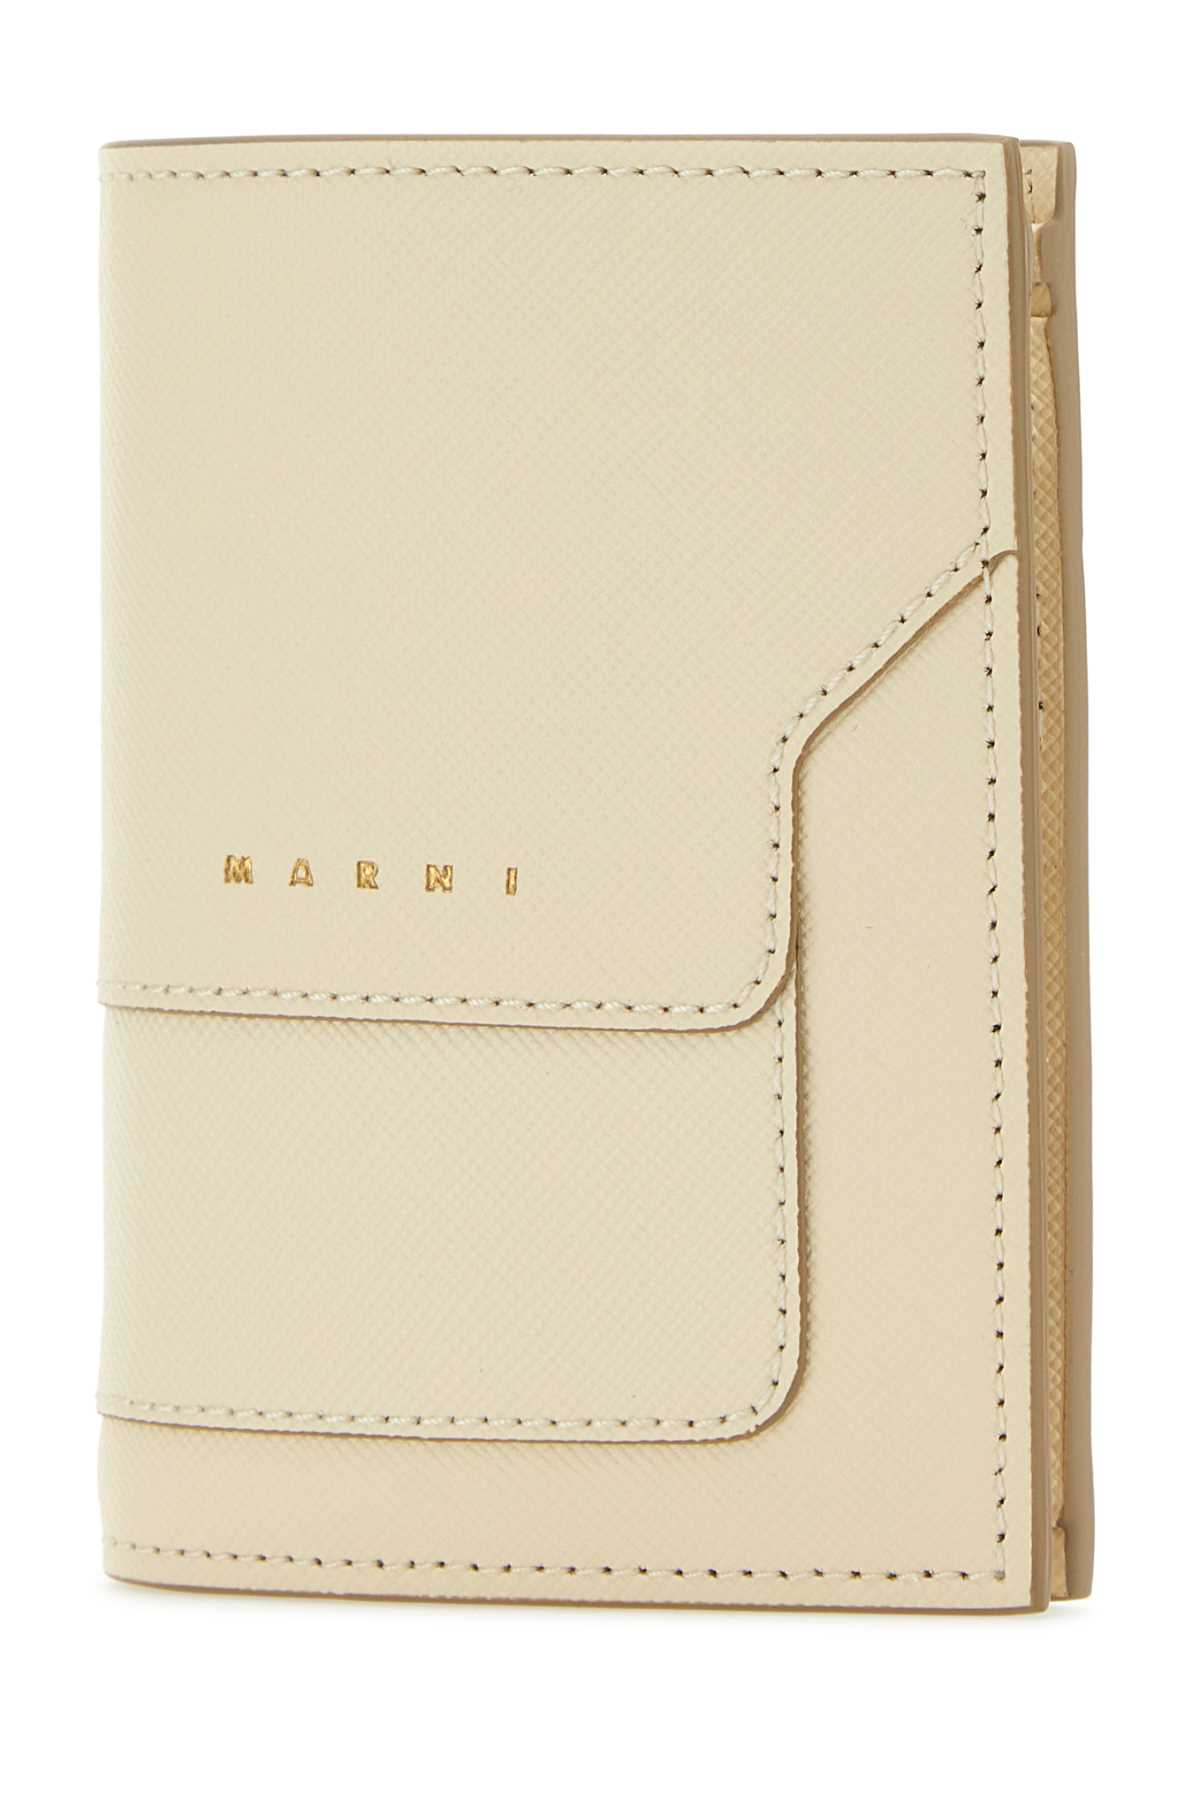 Marni Ivory Leather Wallet In Z601w